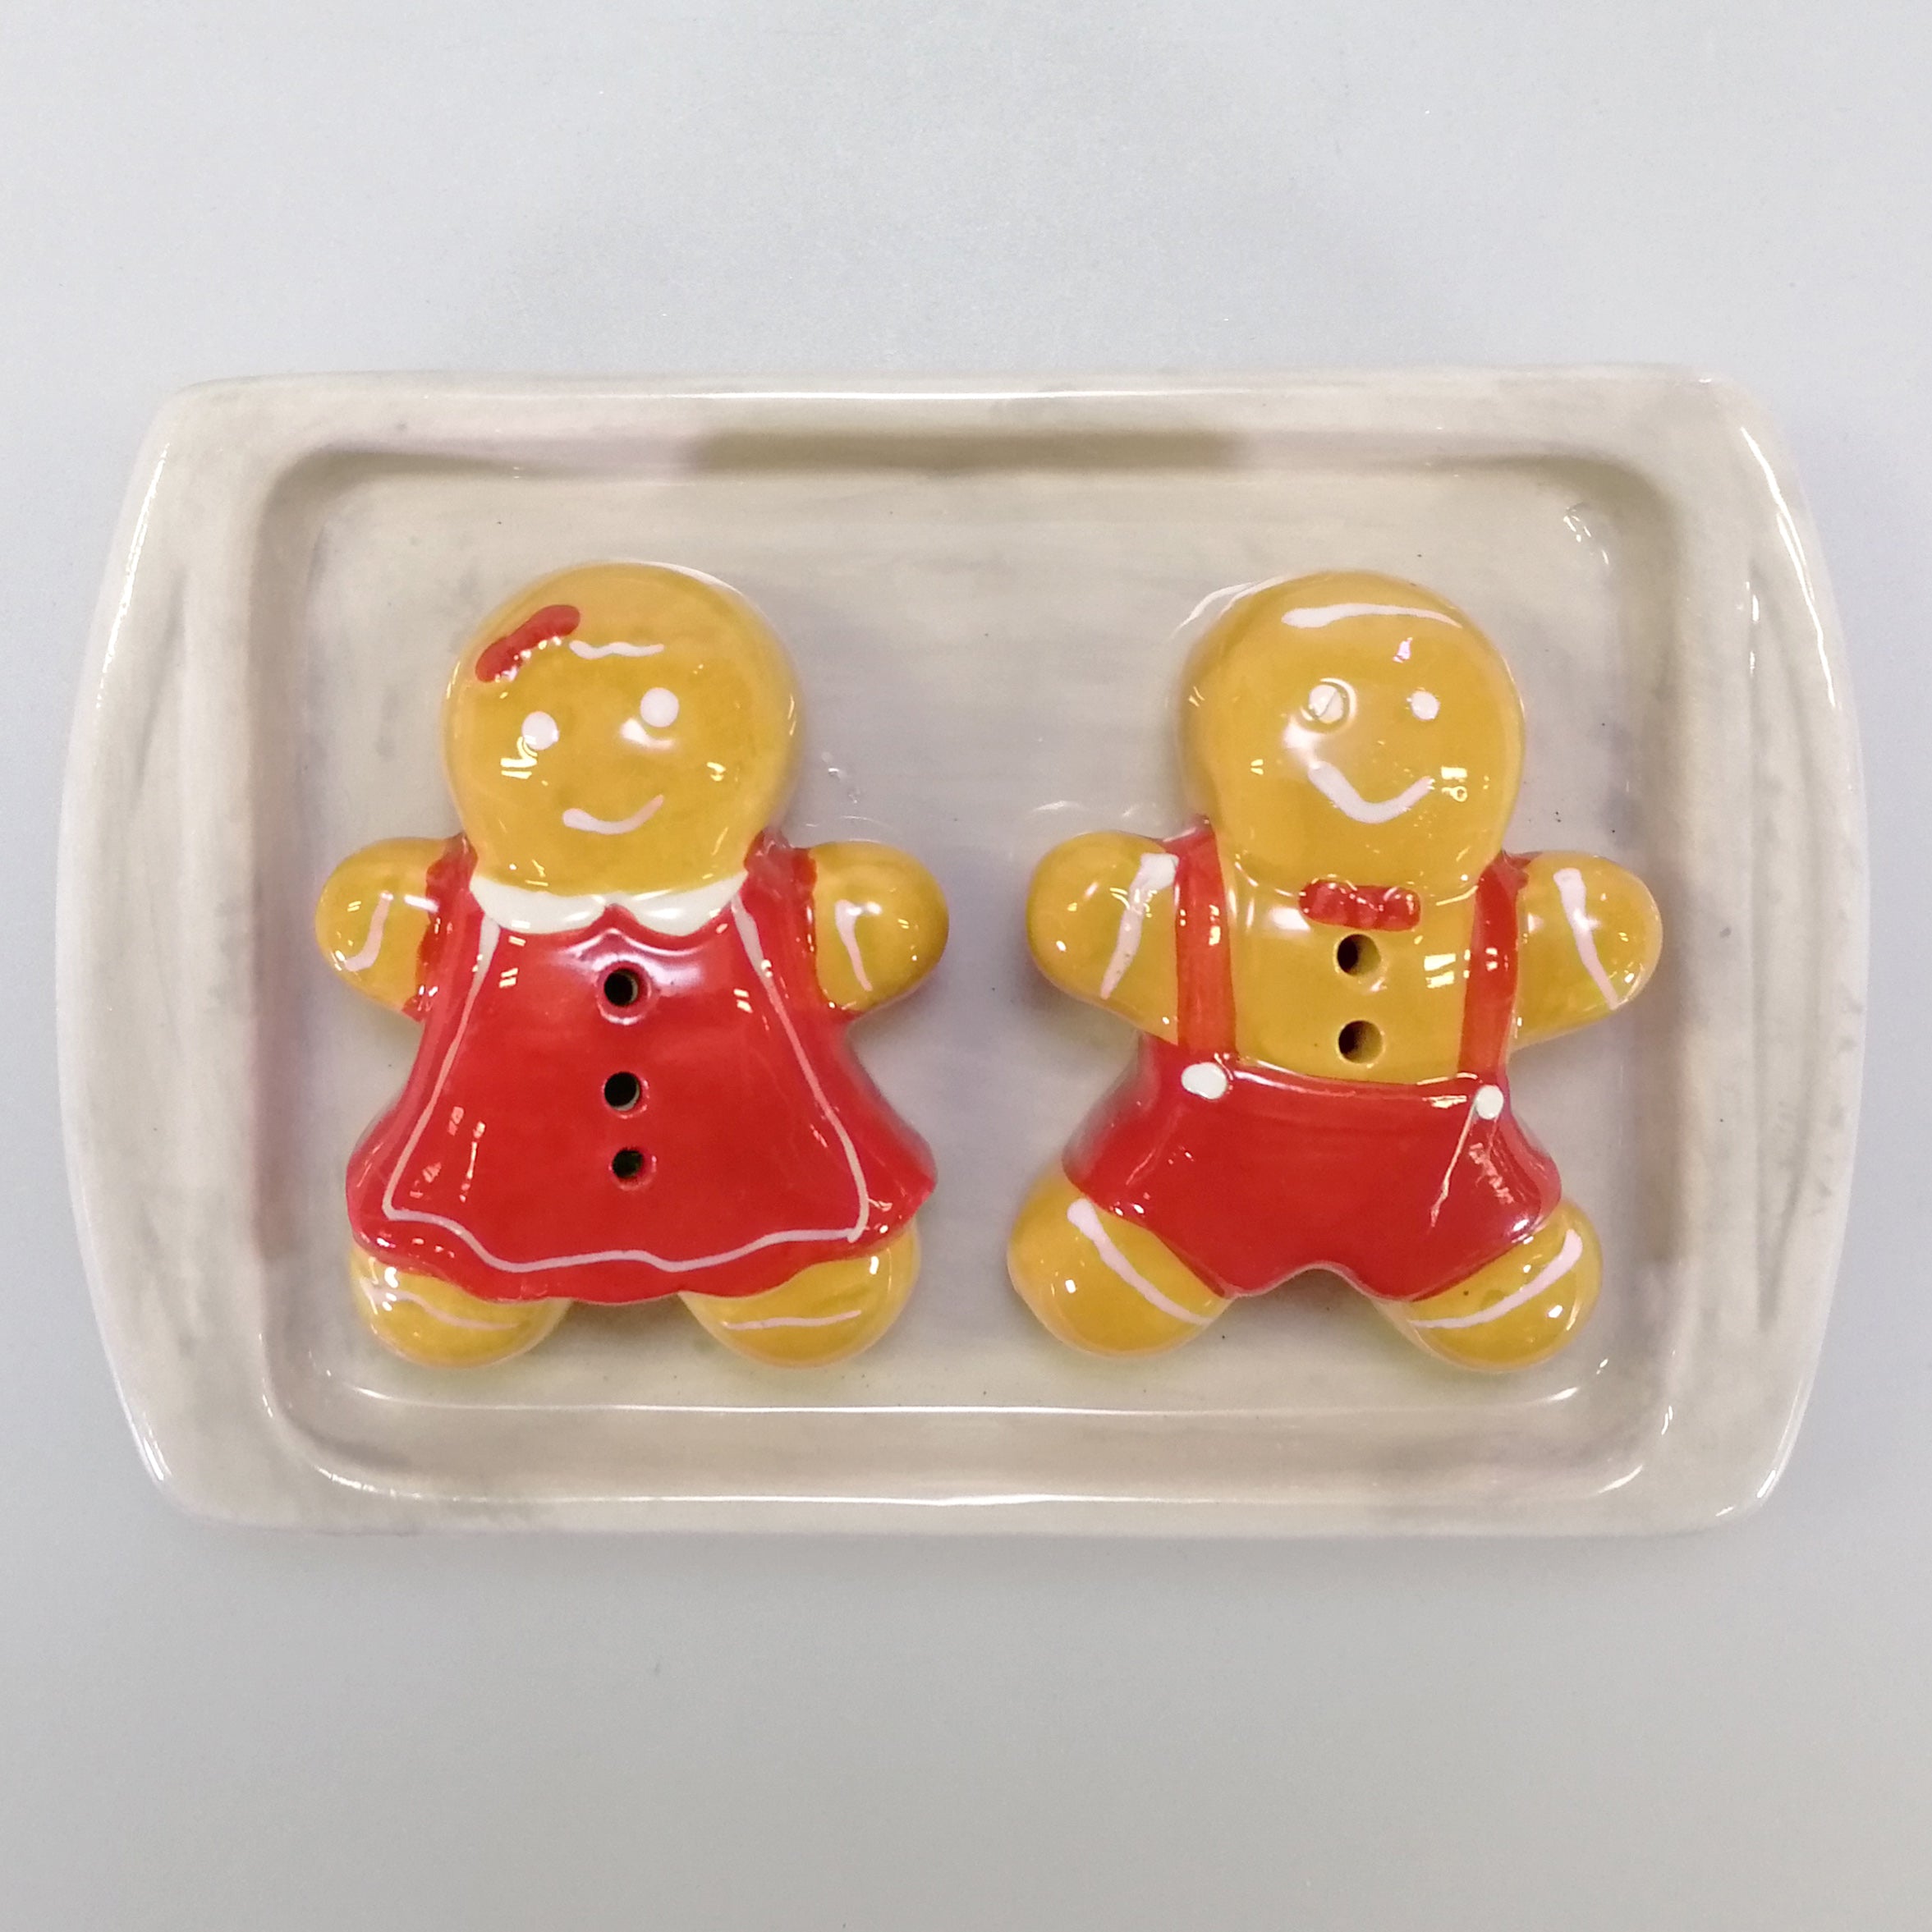 Gingerbread' Collectible Ceramic Salt & Pepper Set